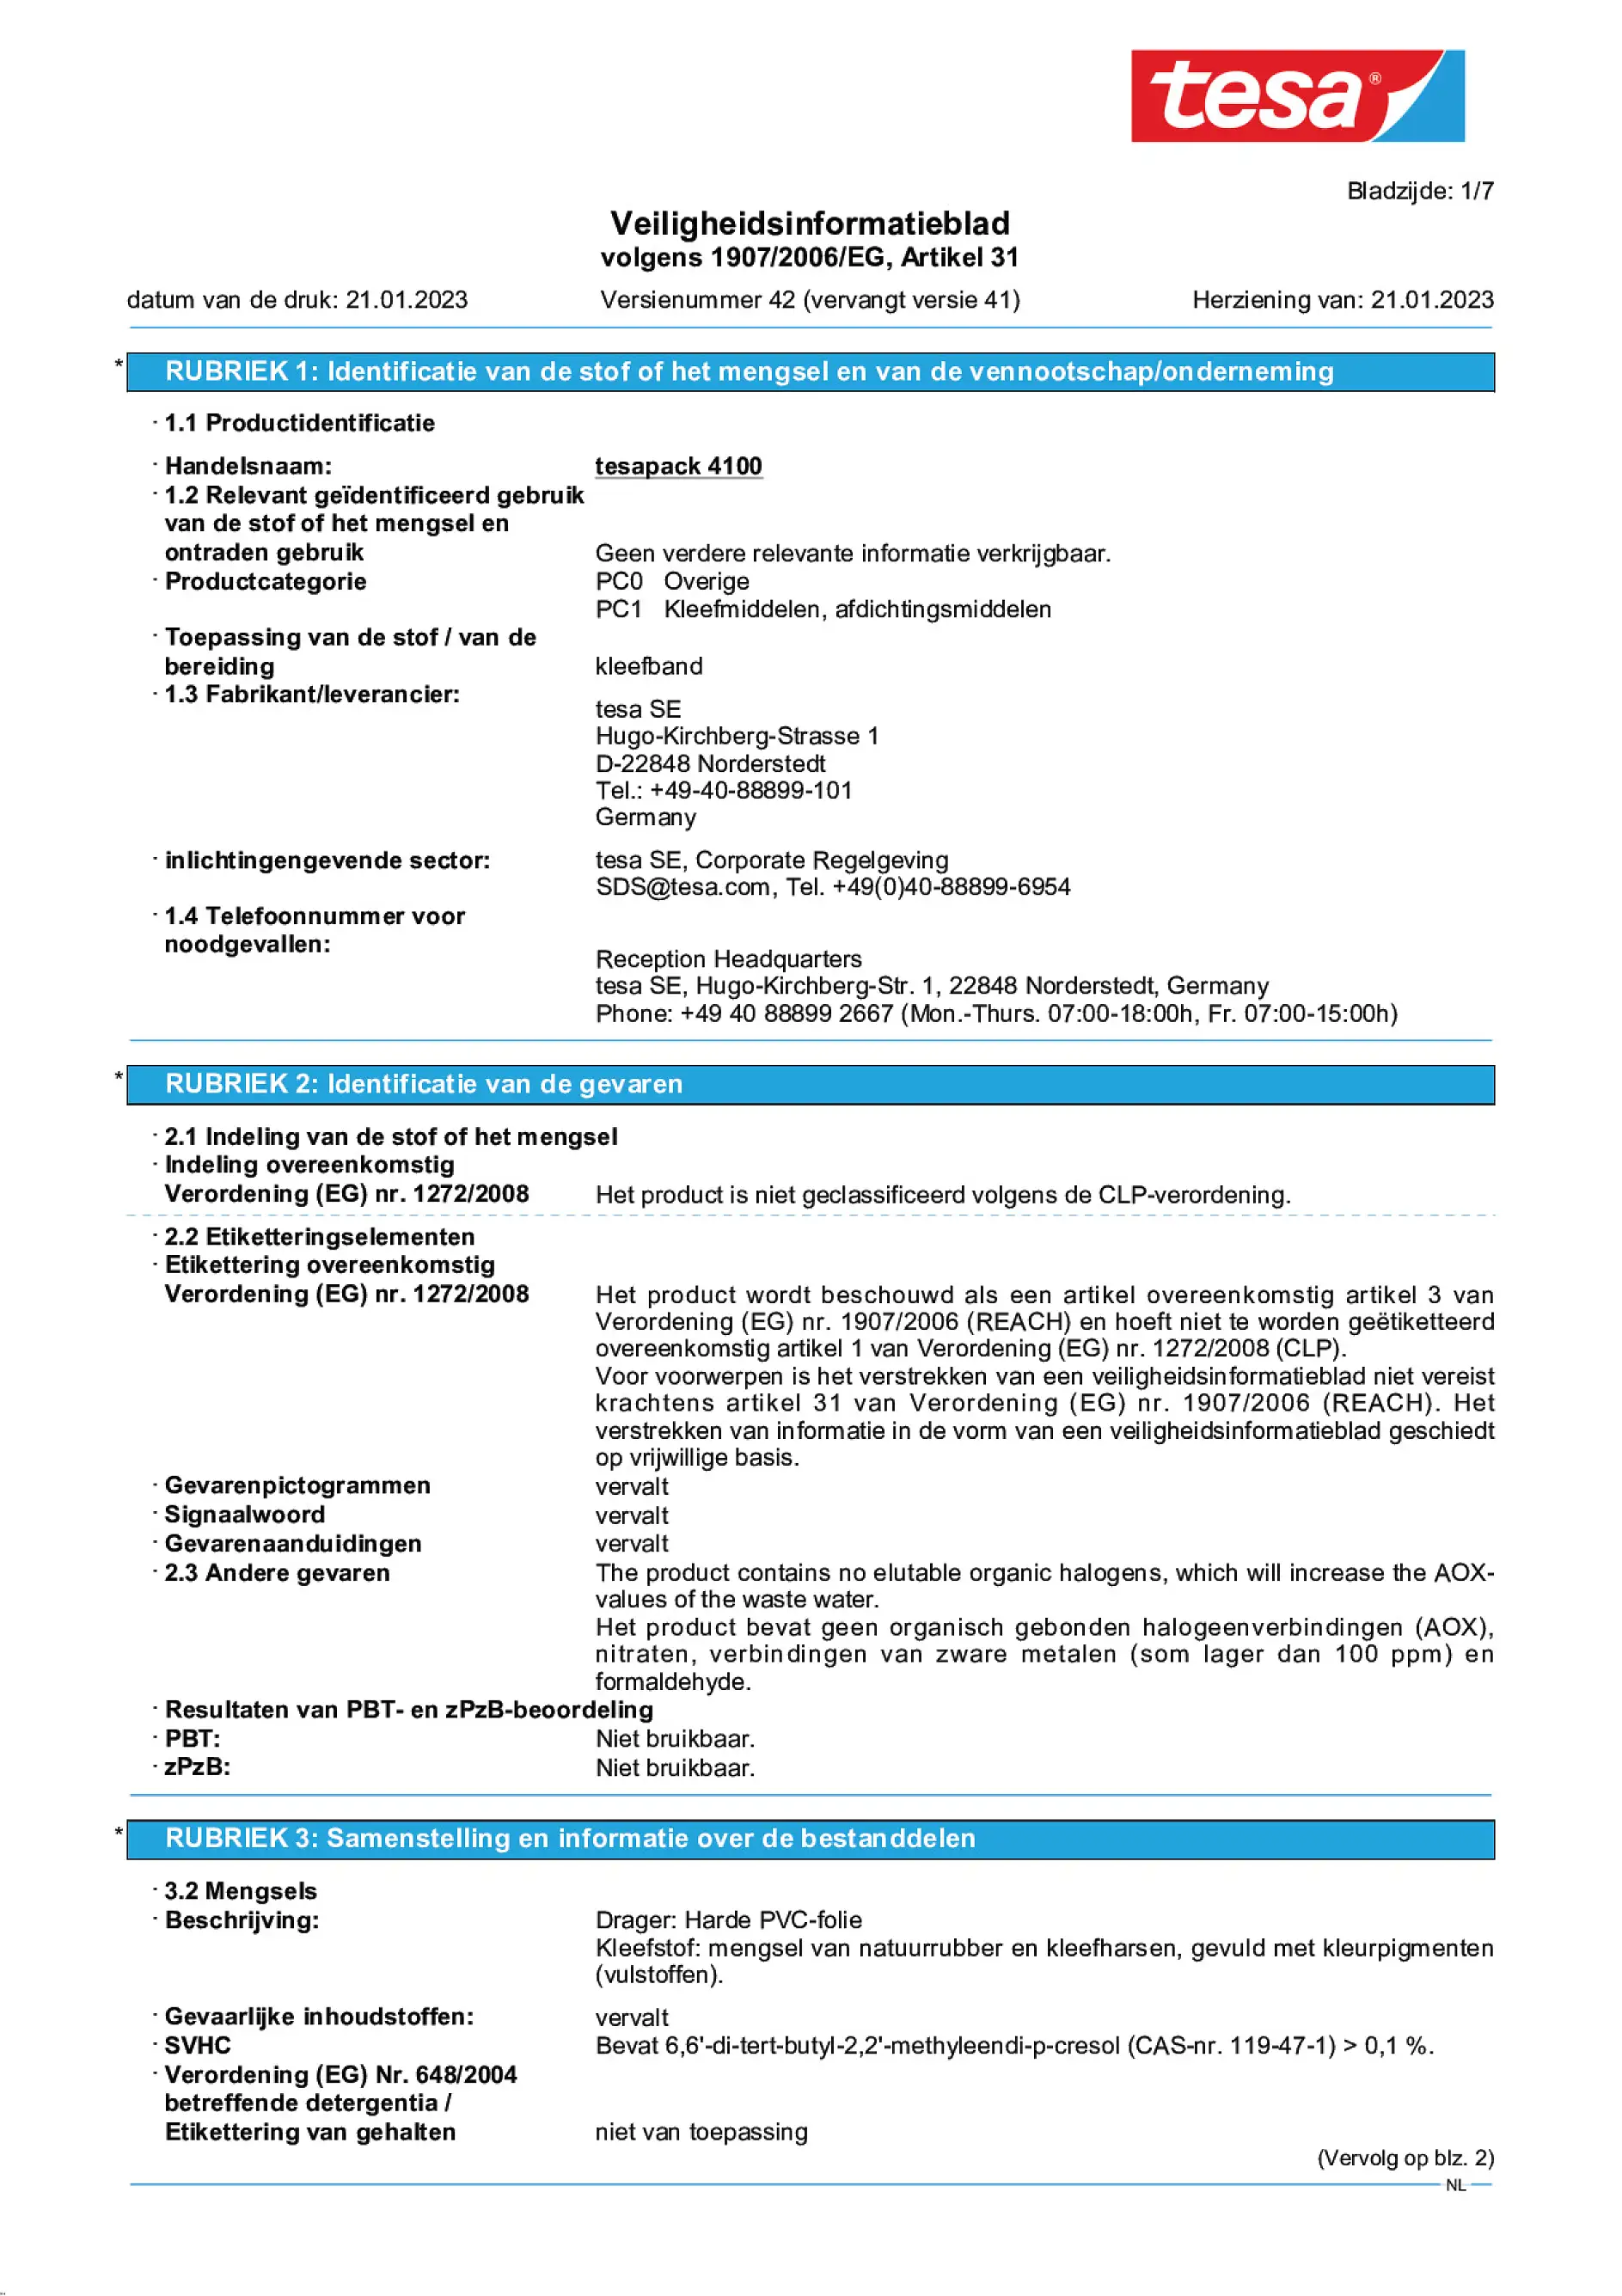 Safety data sheet_tesa® 04100_nl-NL_v42